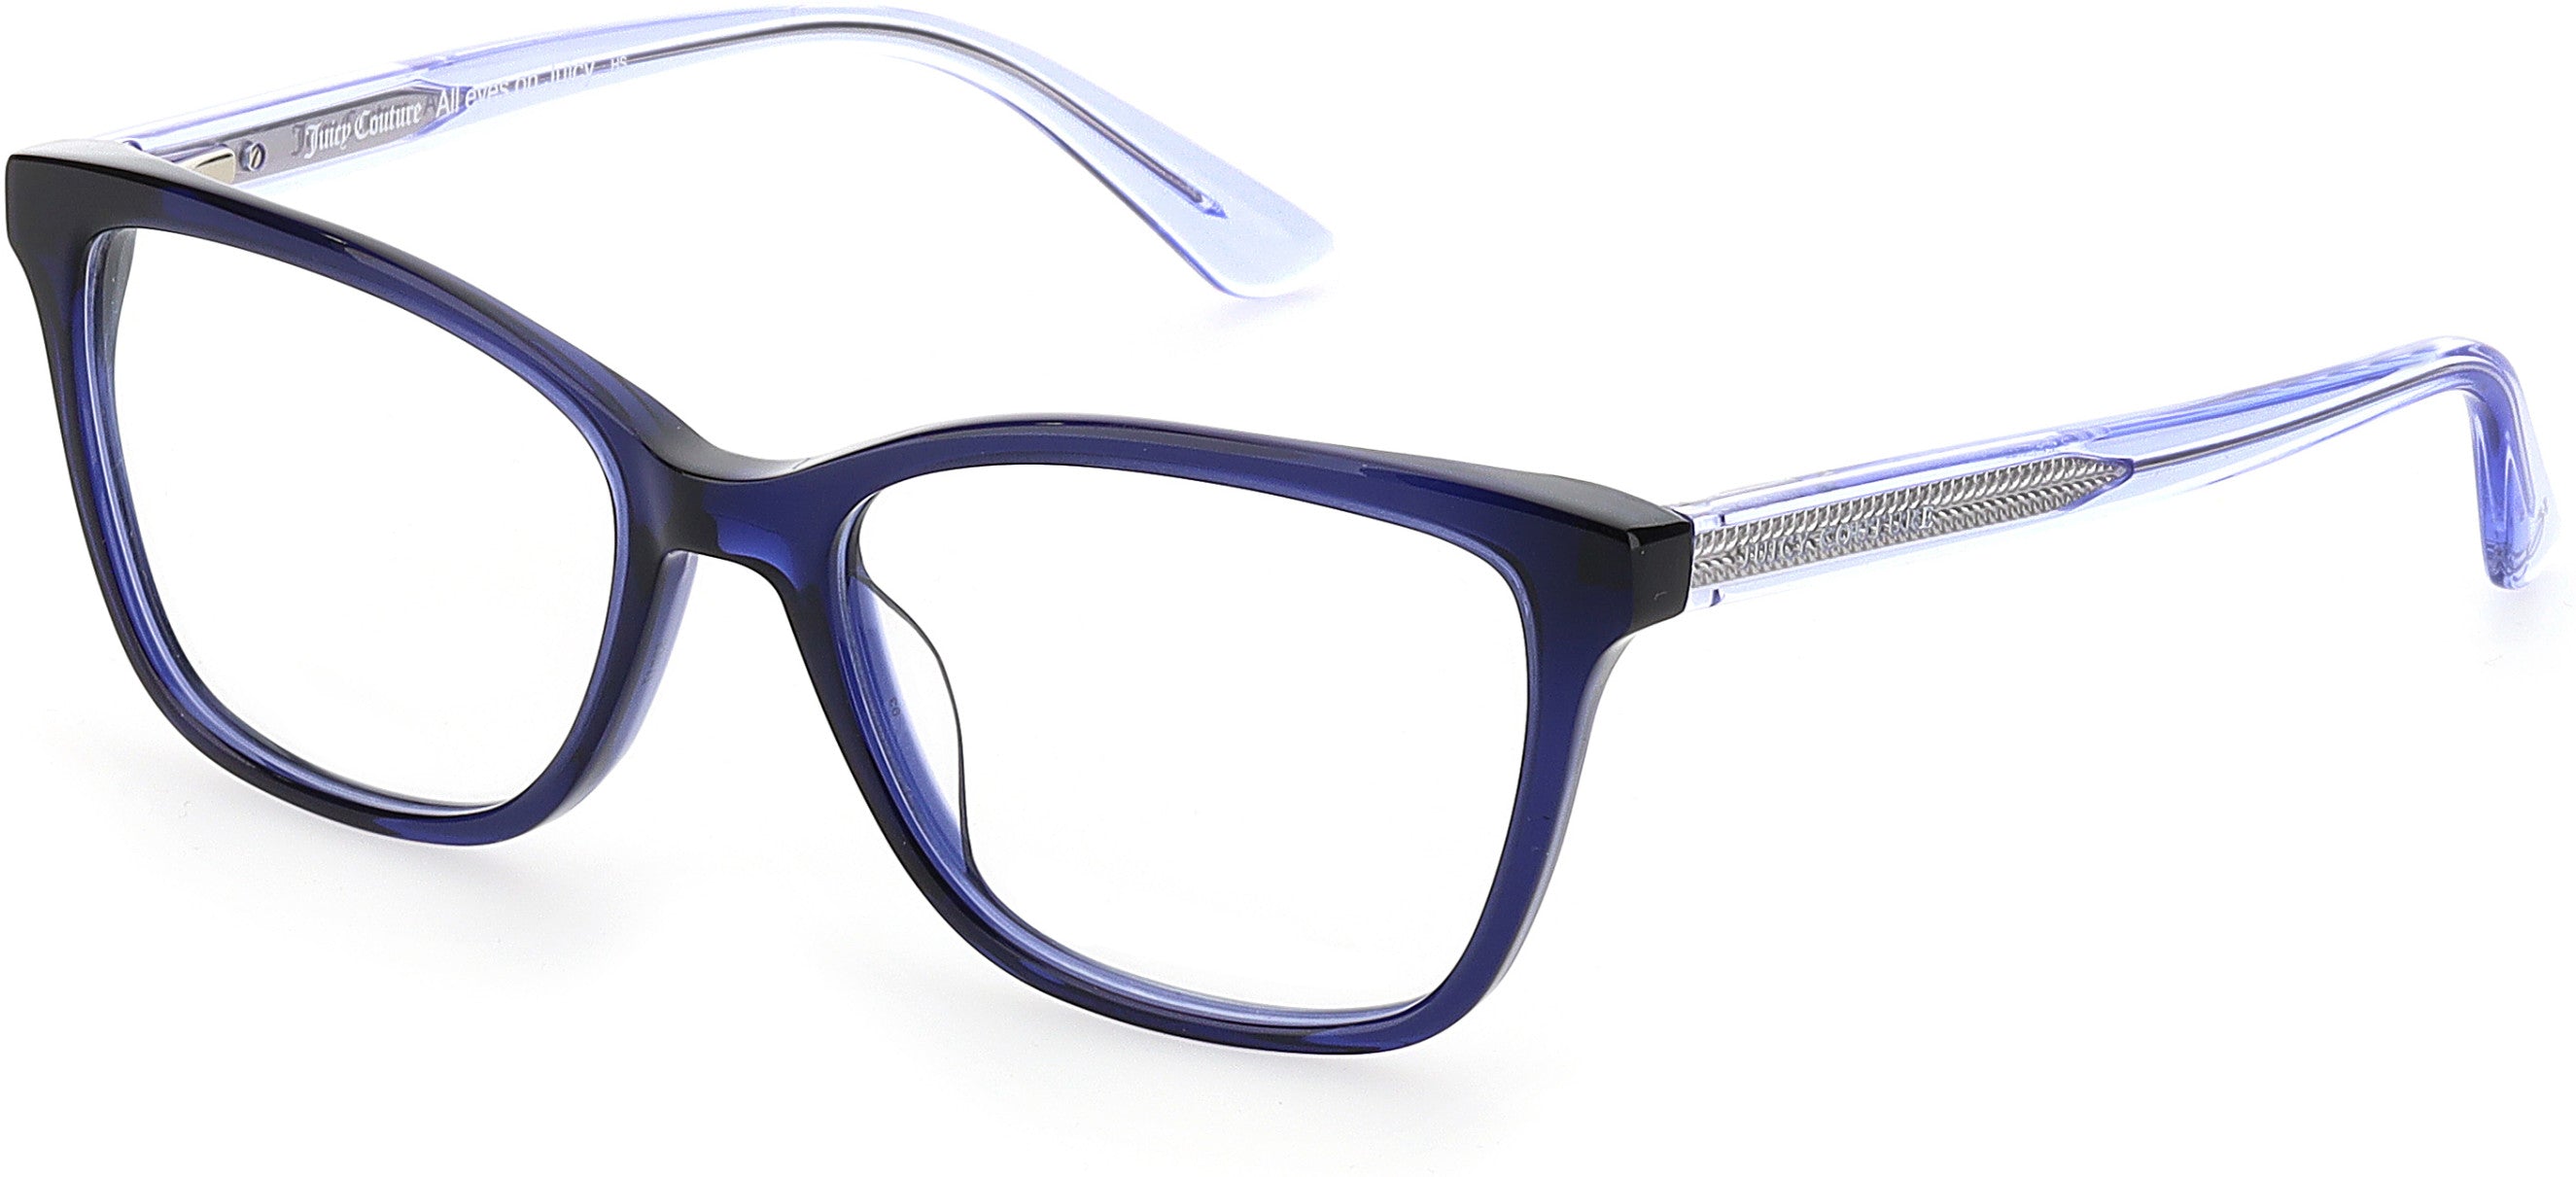 Juicy Couture Juicy 202 Rectangular Eyeglasses 0QM4-0QM4  Crystal Blue (00 Demo Lens)